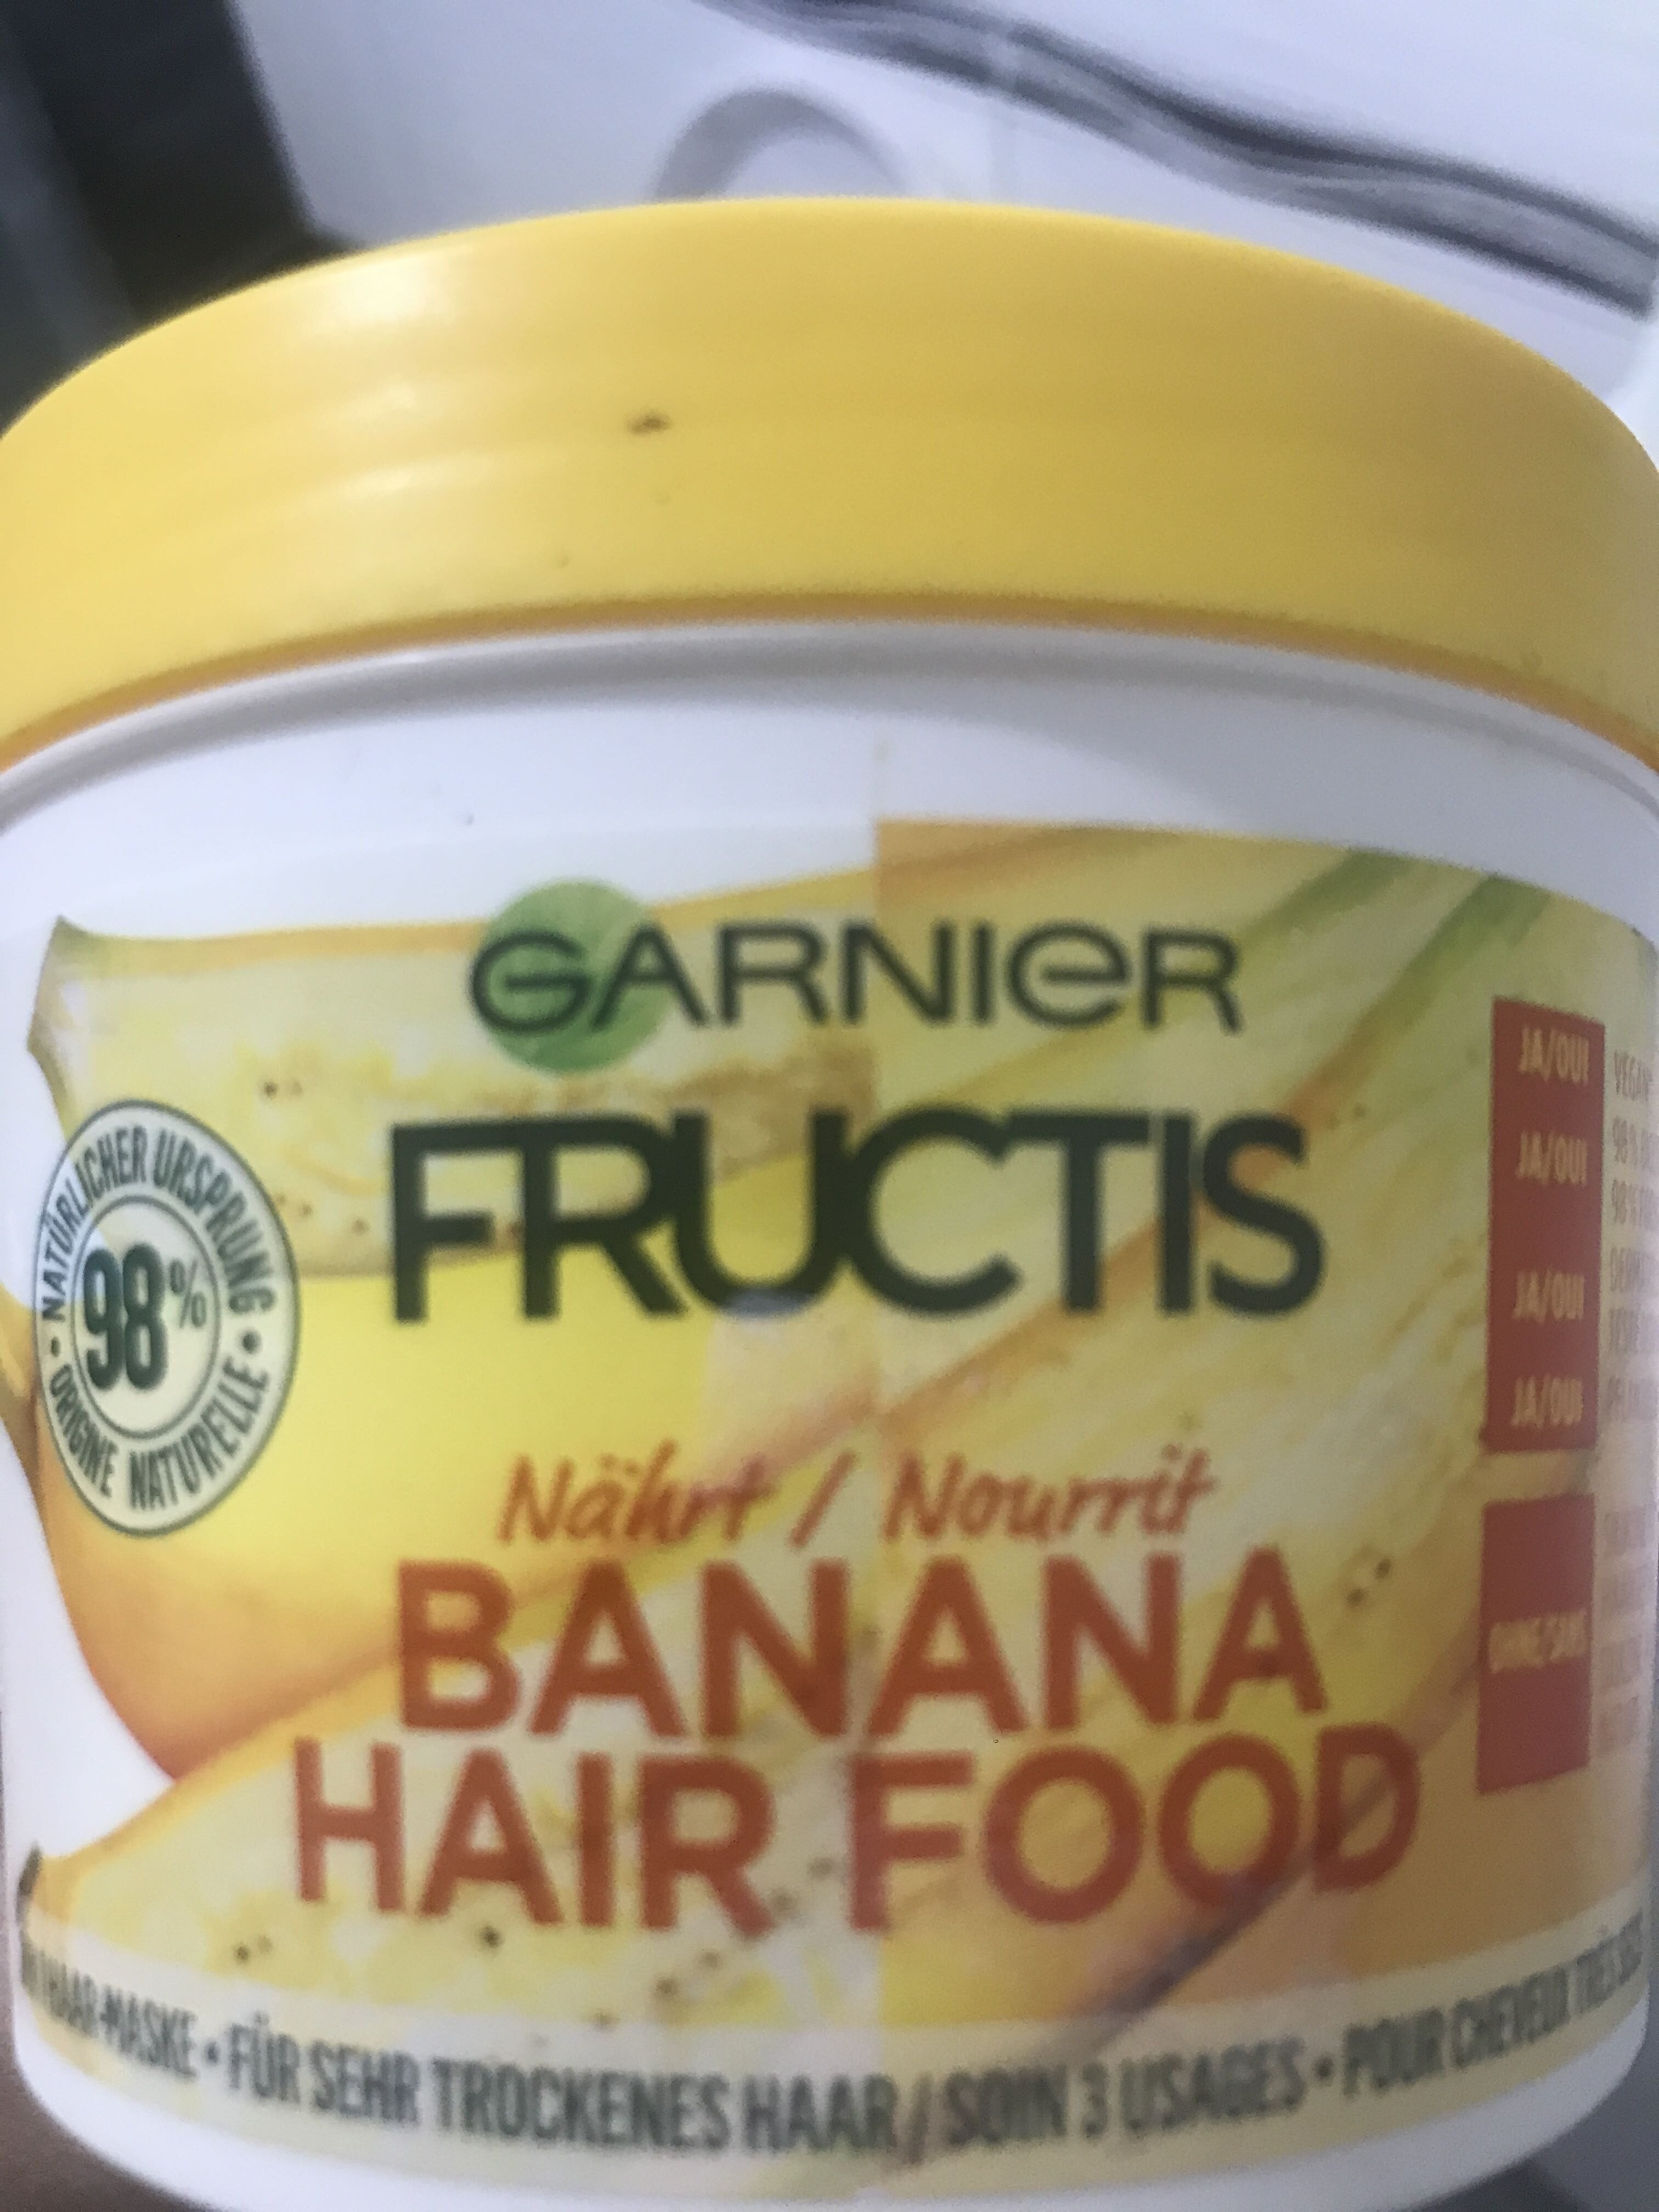 FRUCTIS - Banana Hair Food - Garnier - 390 ml